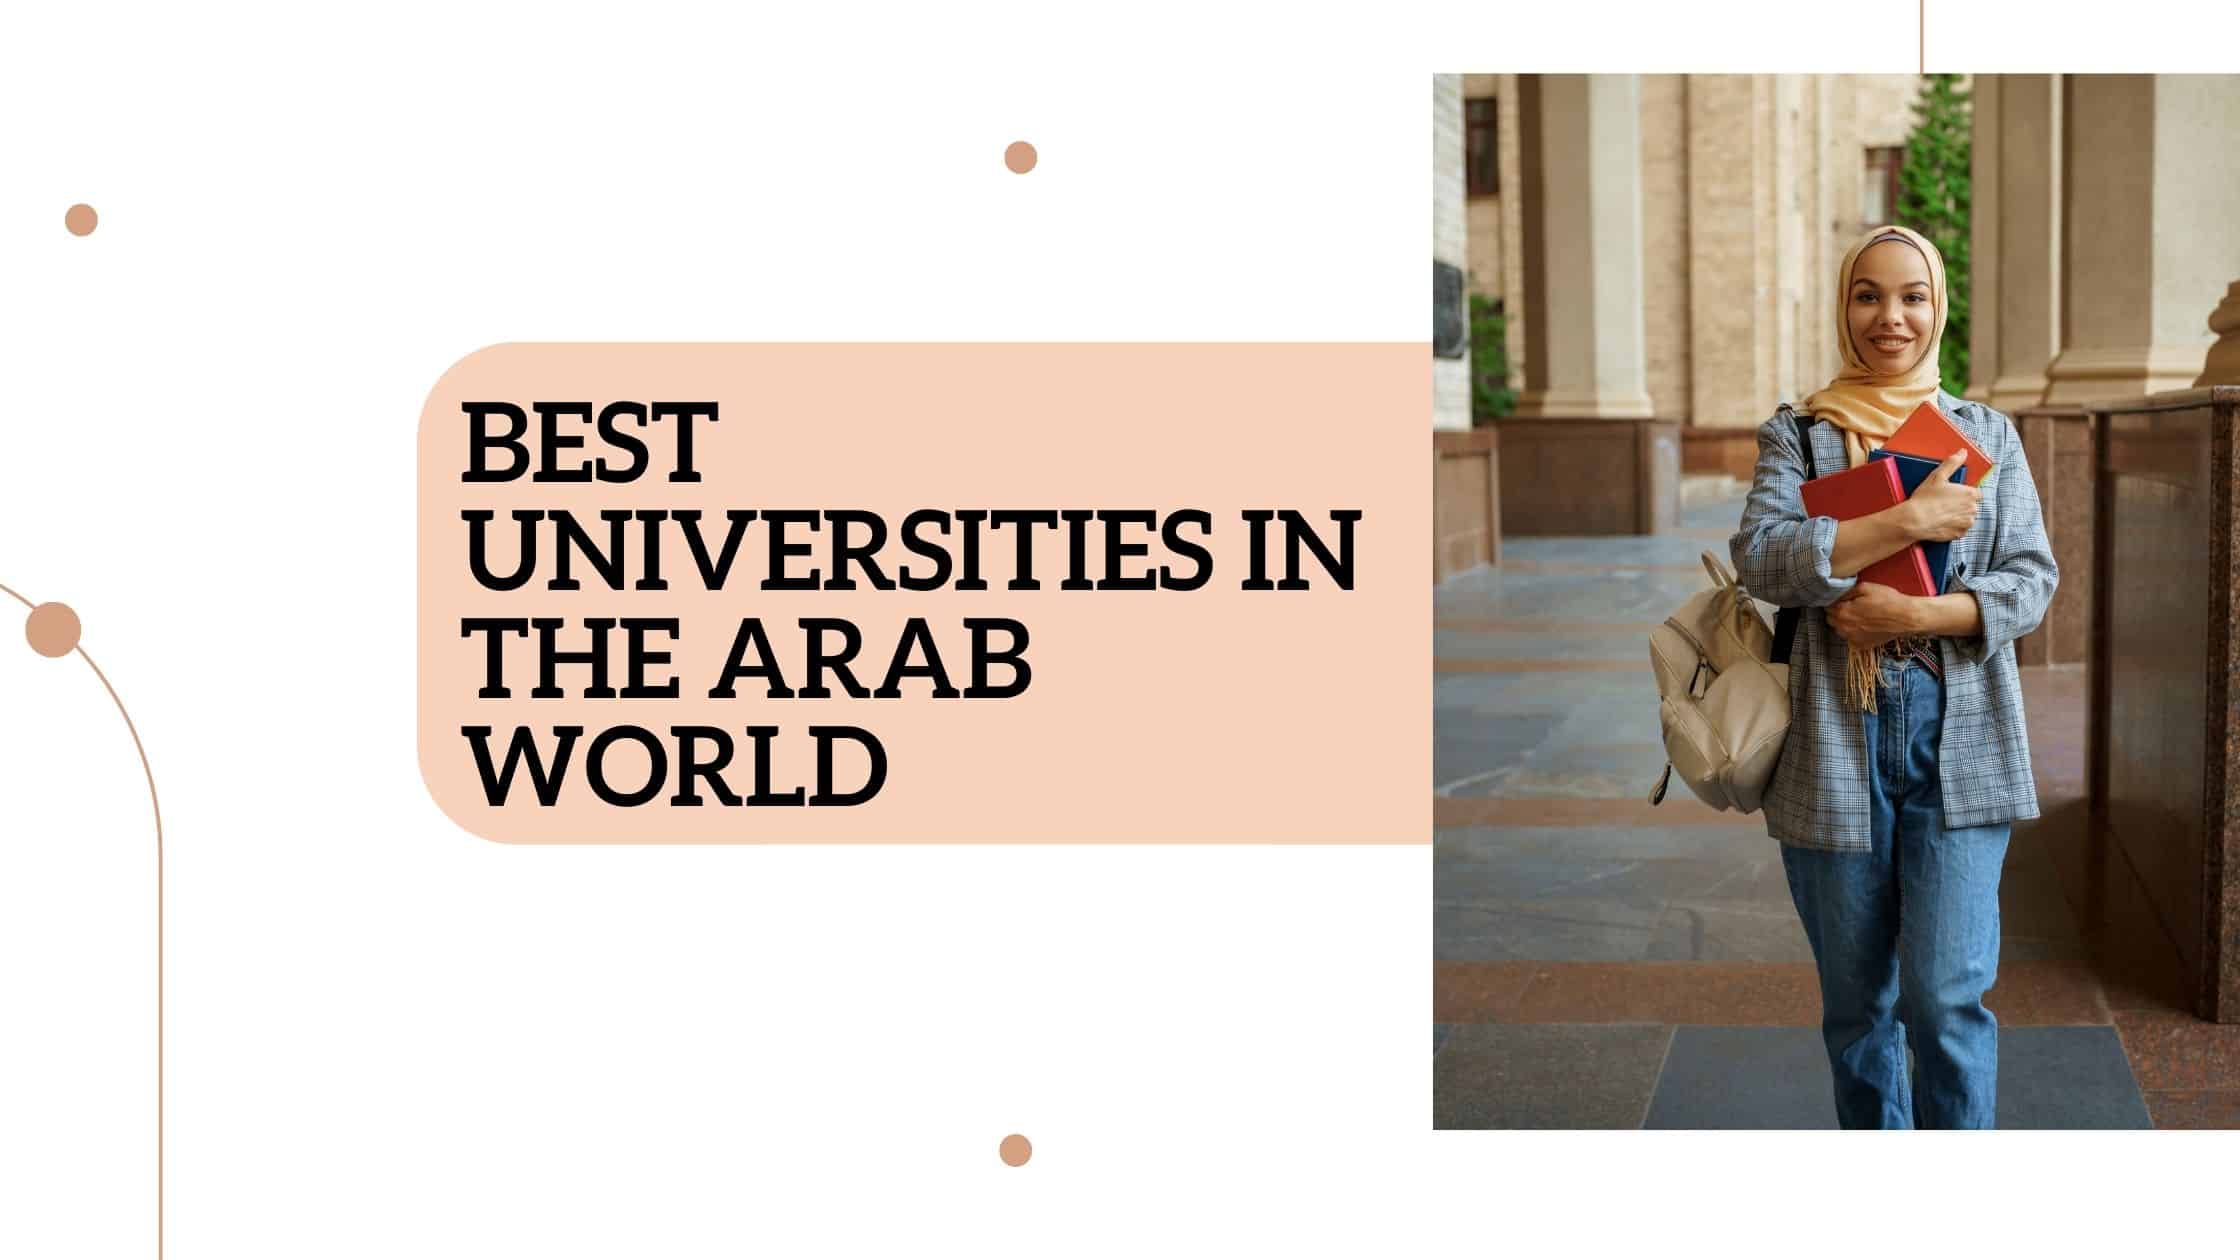 Best universities in the Arab world